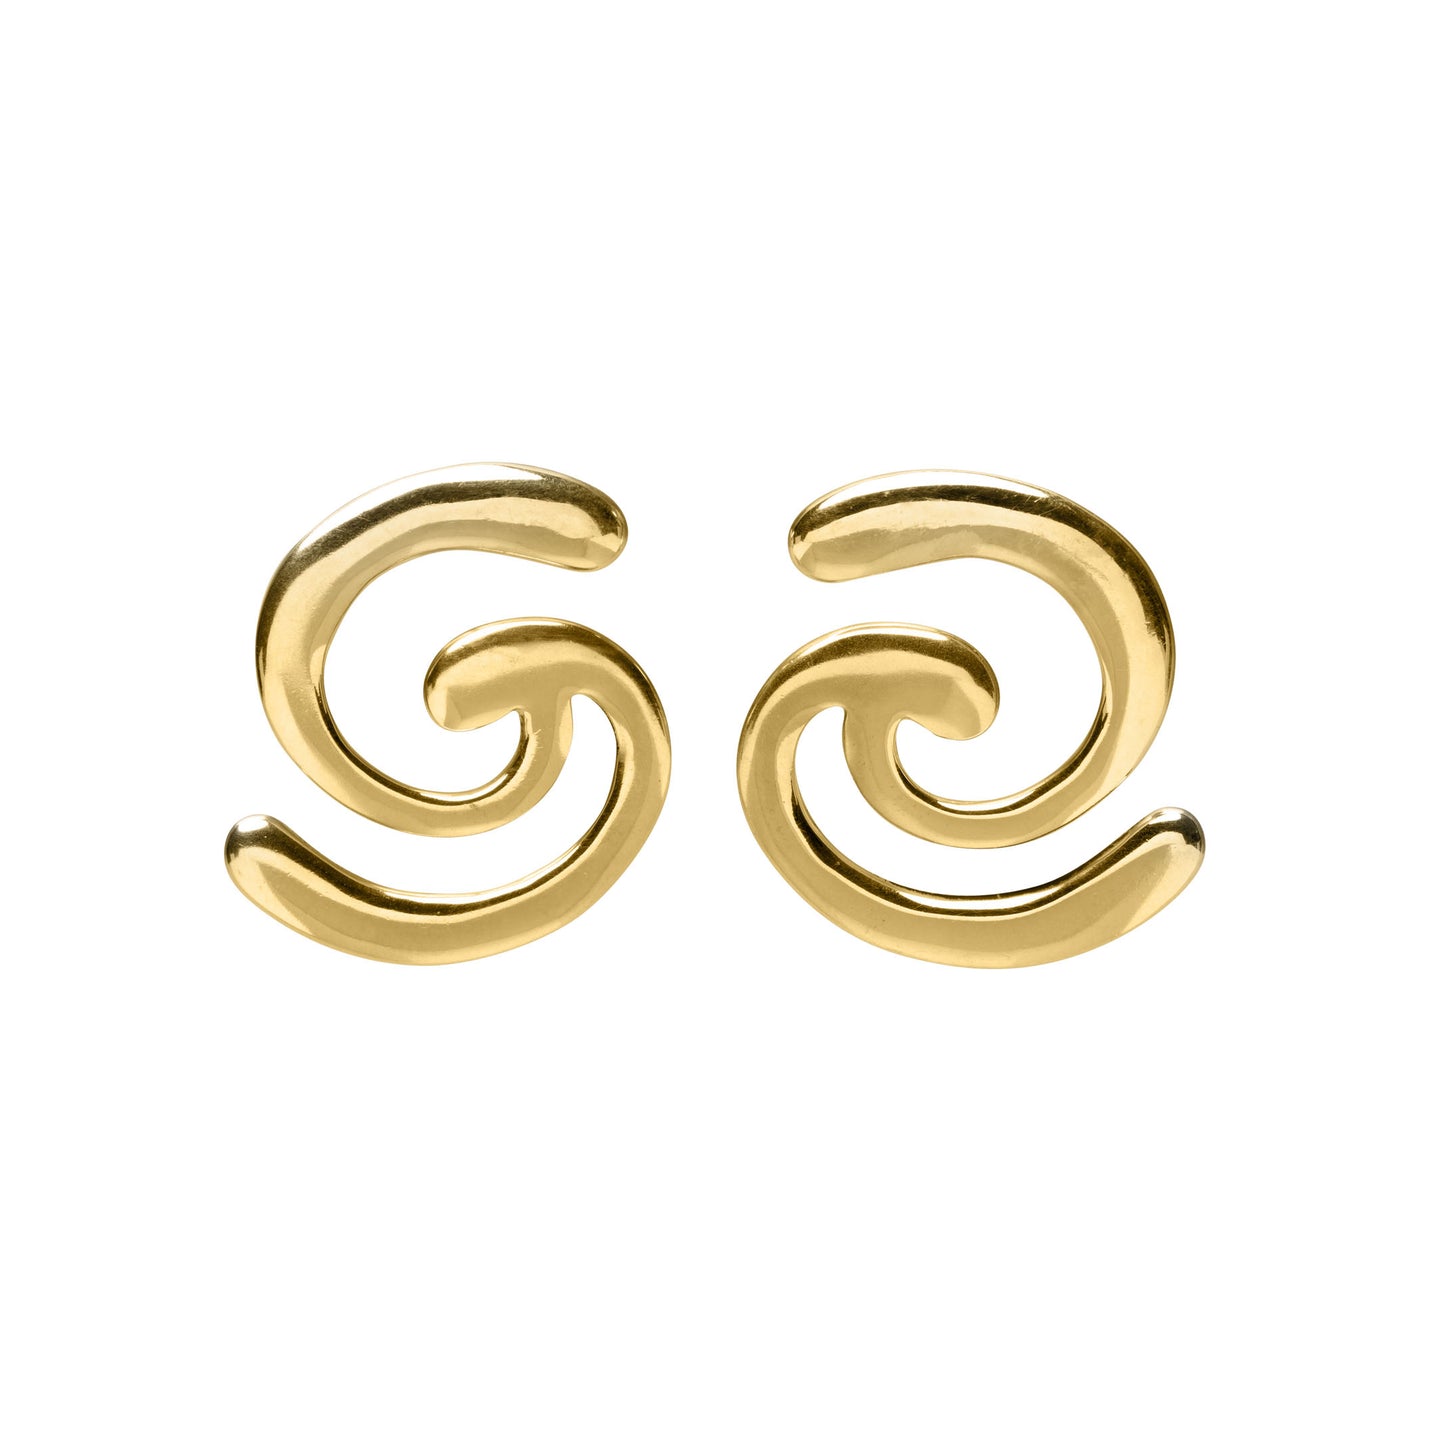 Pair of spiral gold earrings